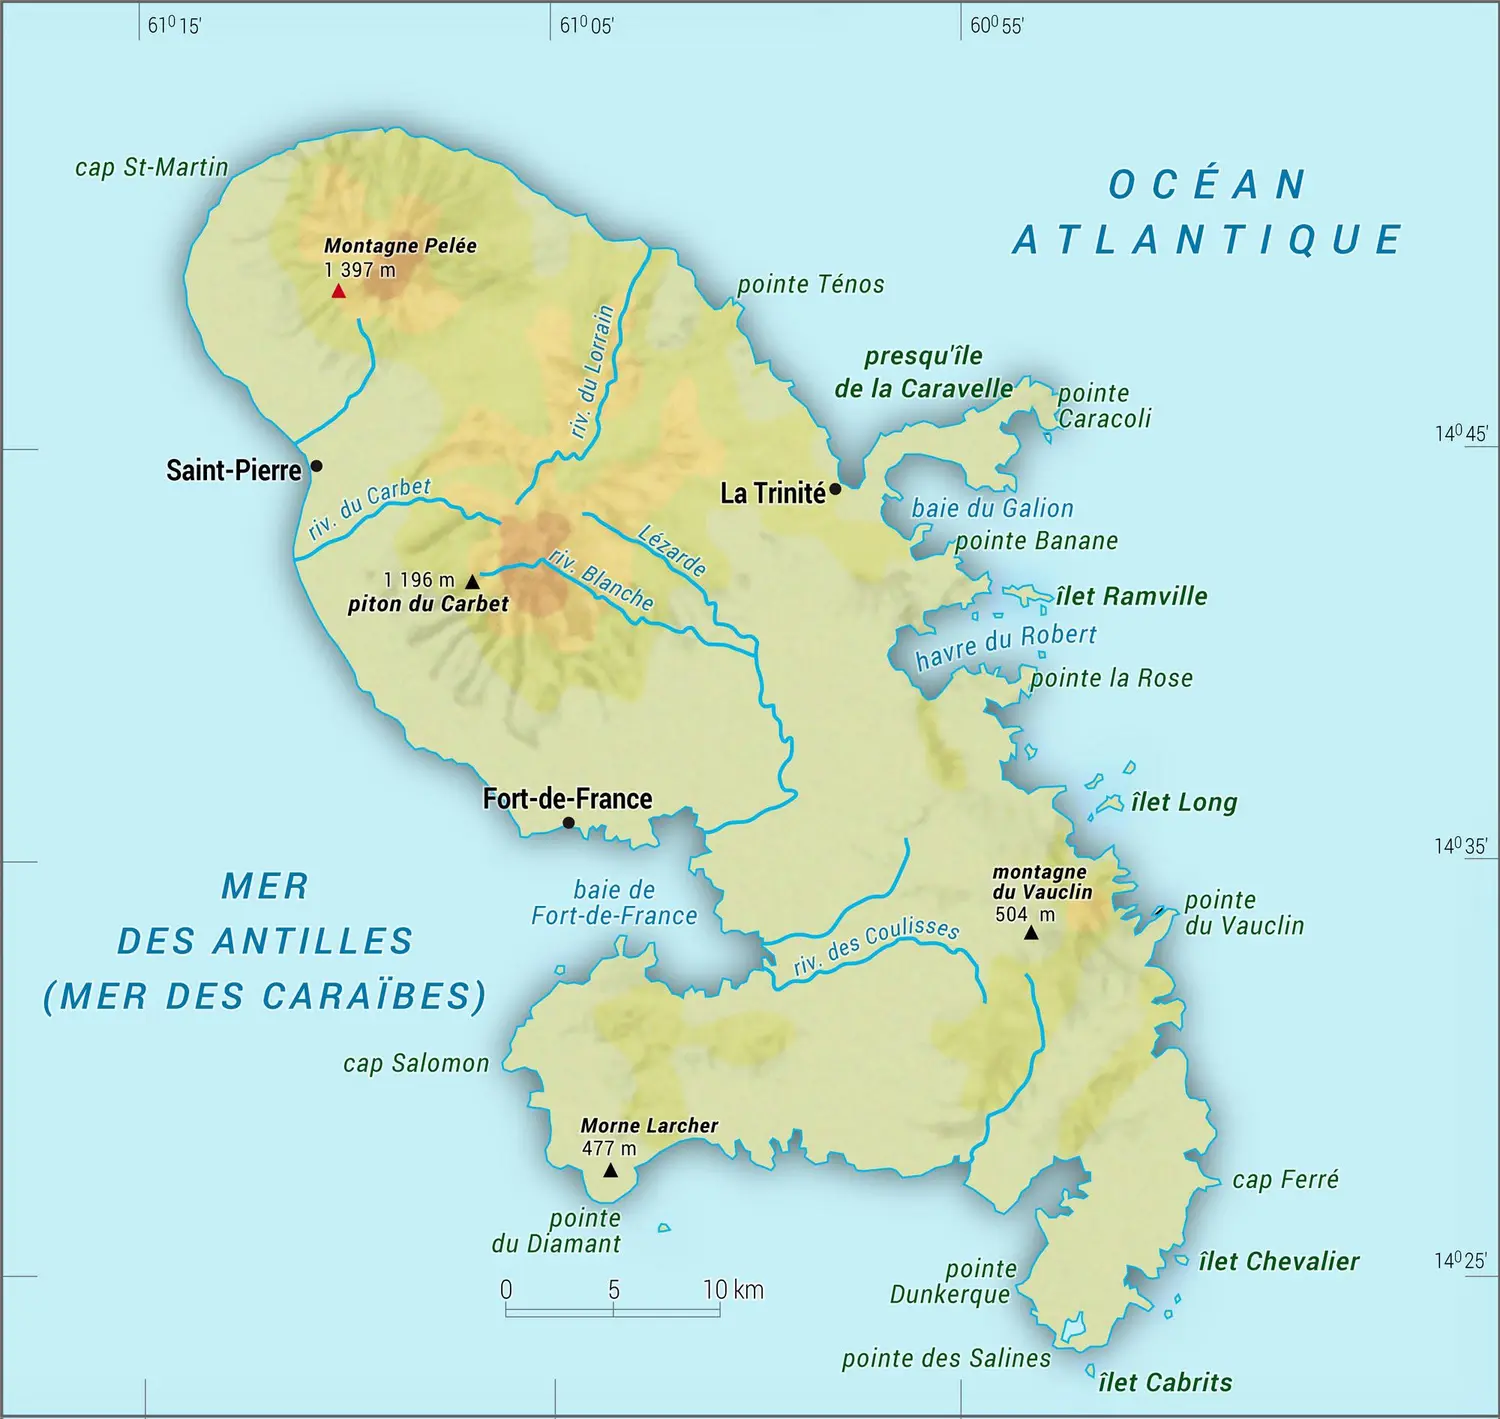 Martinique [France] : carte physique